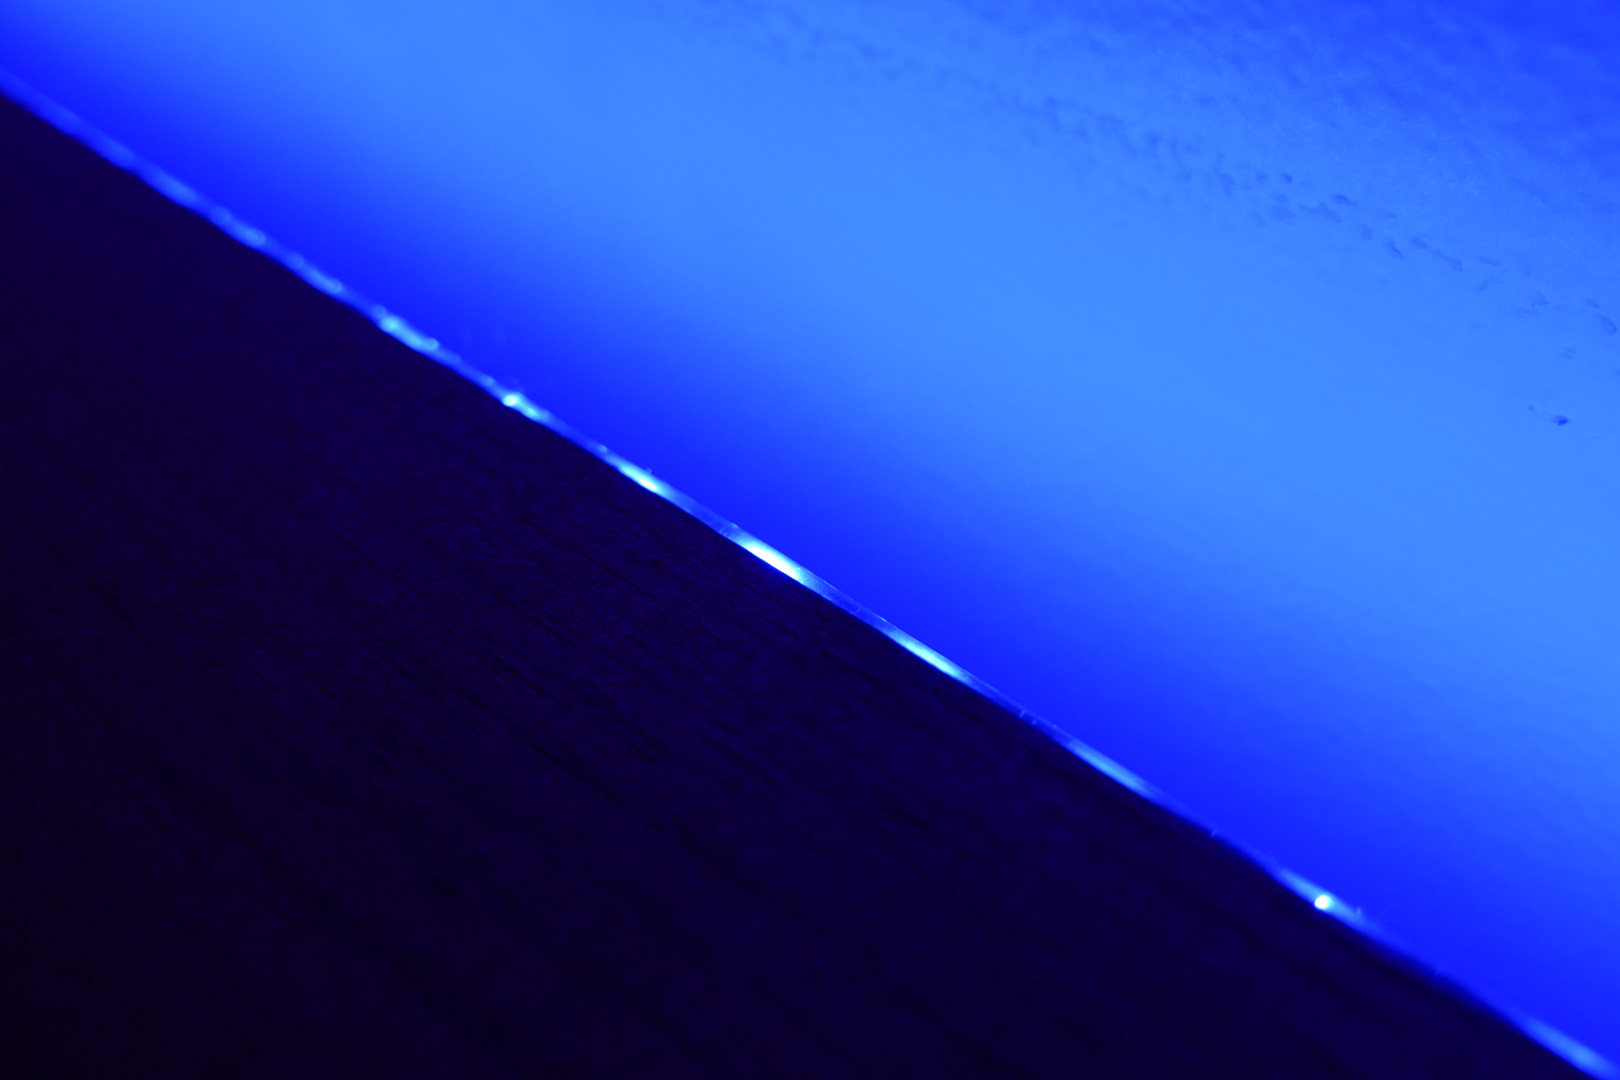 LED Light Strips For Your Desk